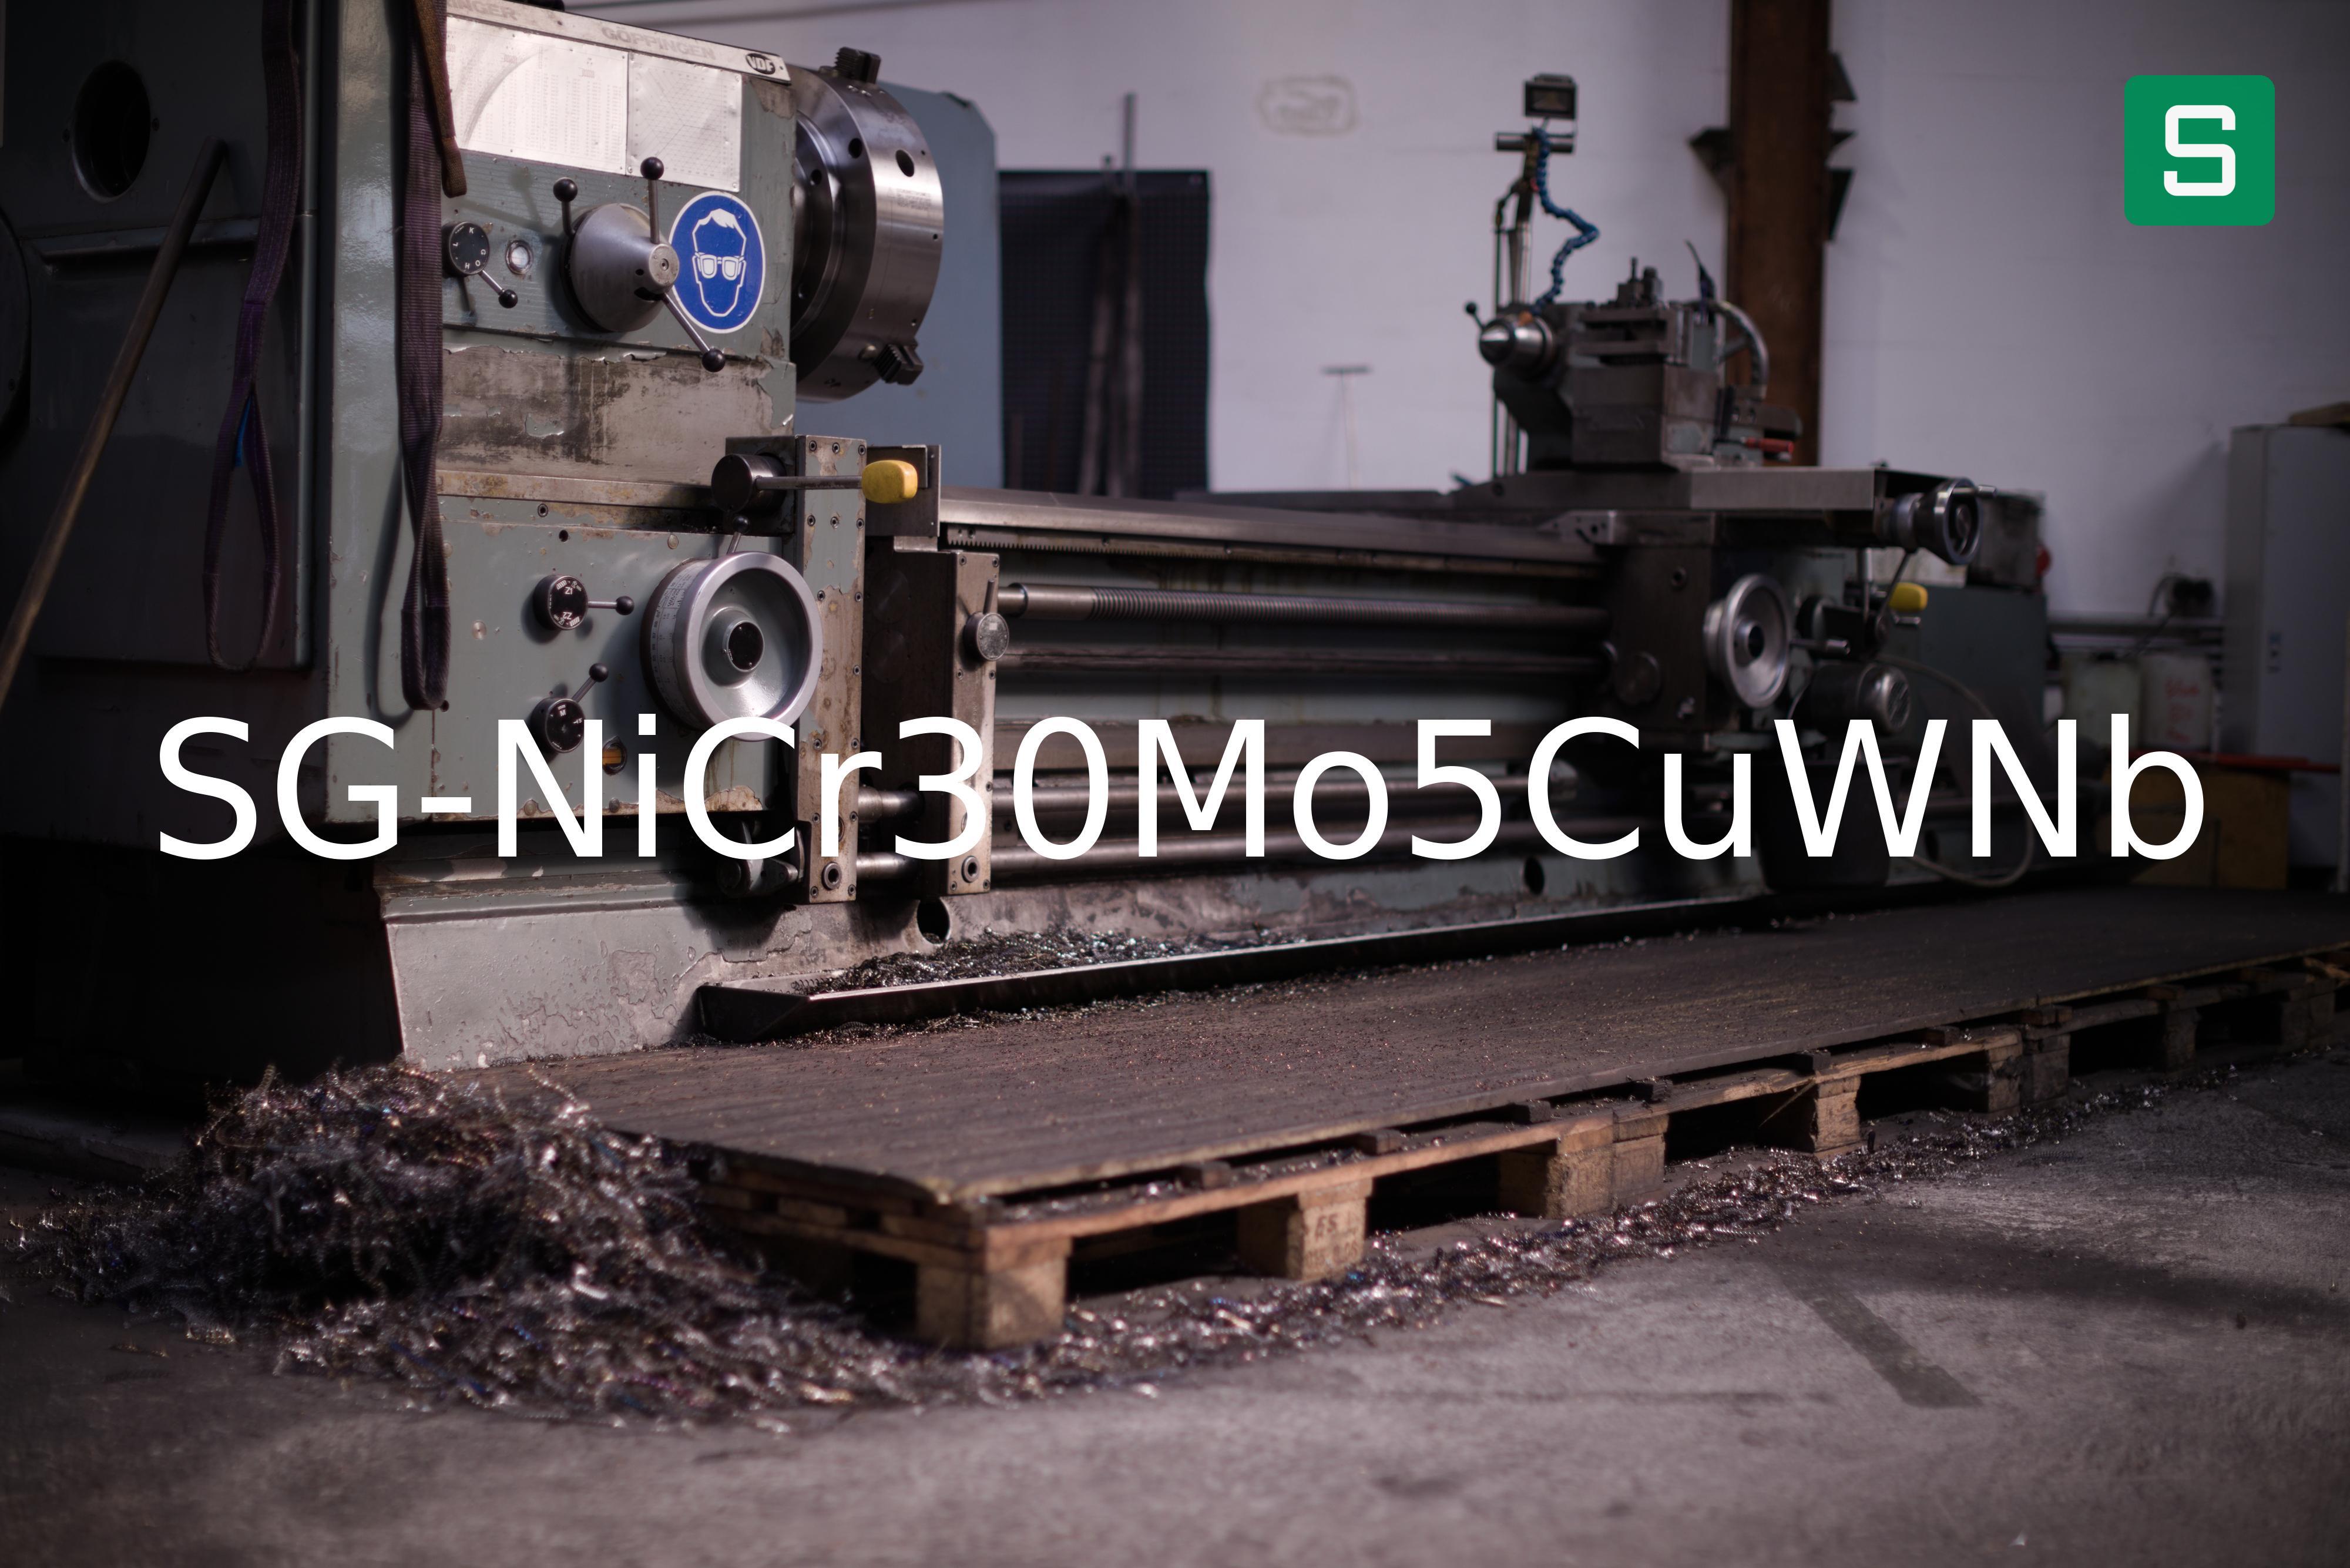 Steel Material: SG-NiCr30Mo5CuWNb